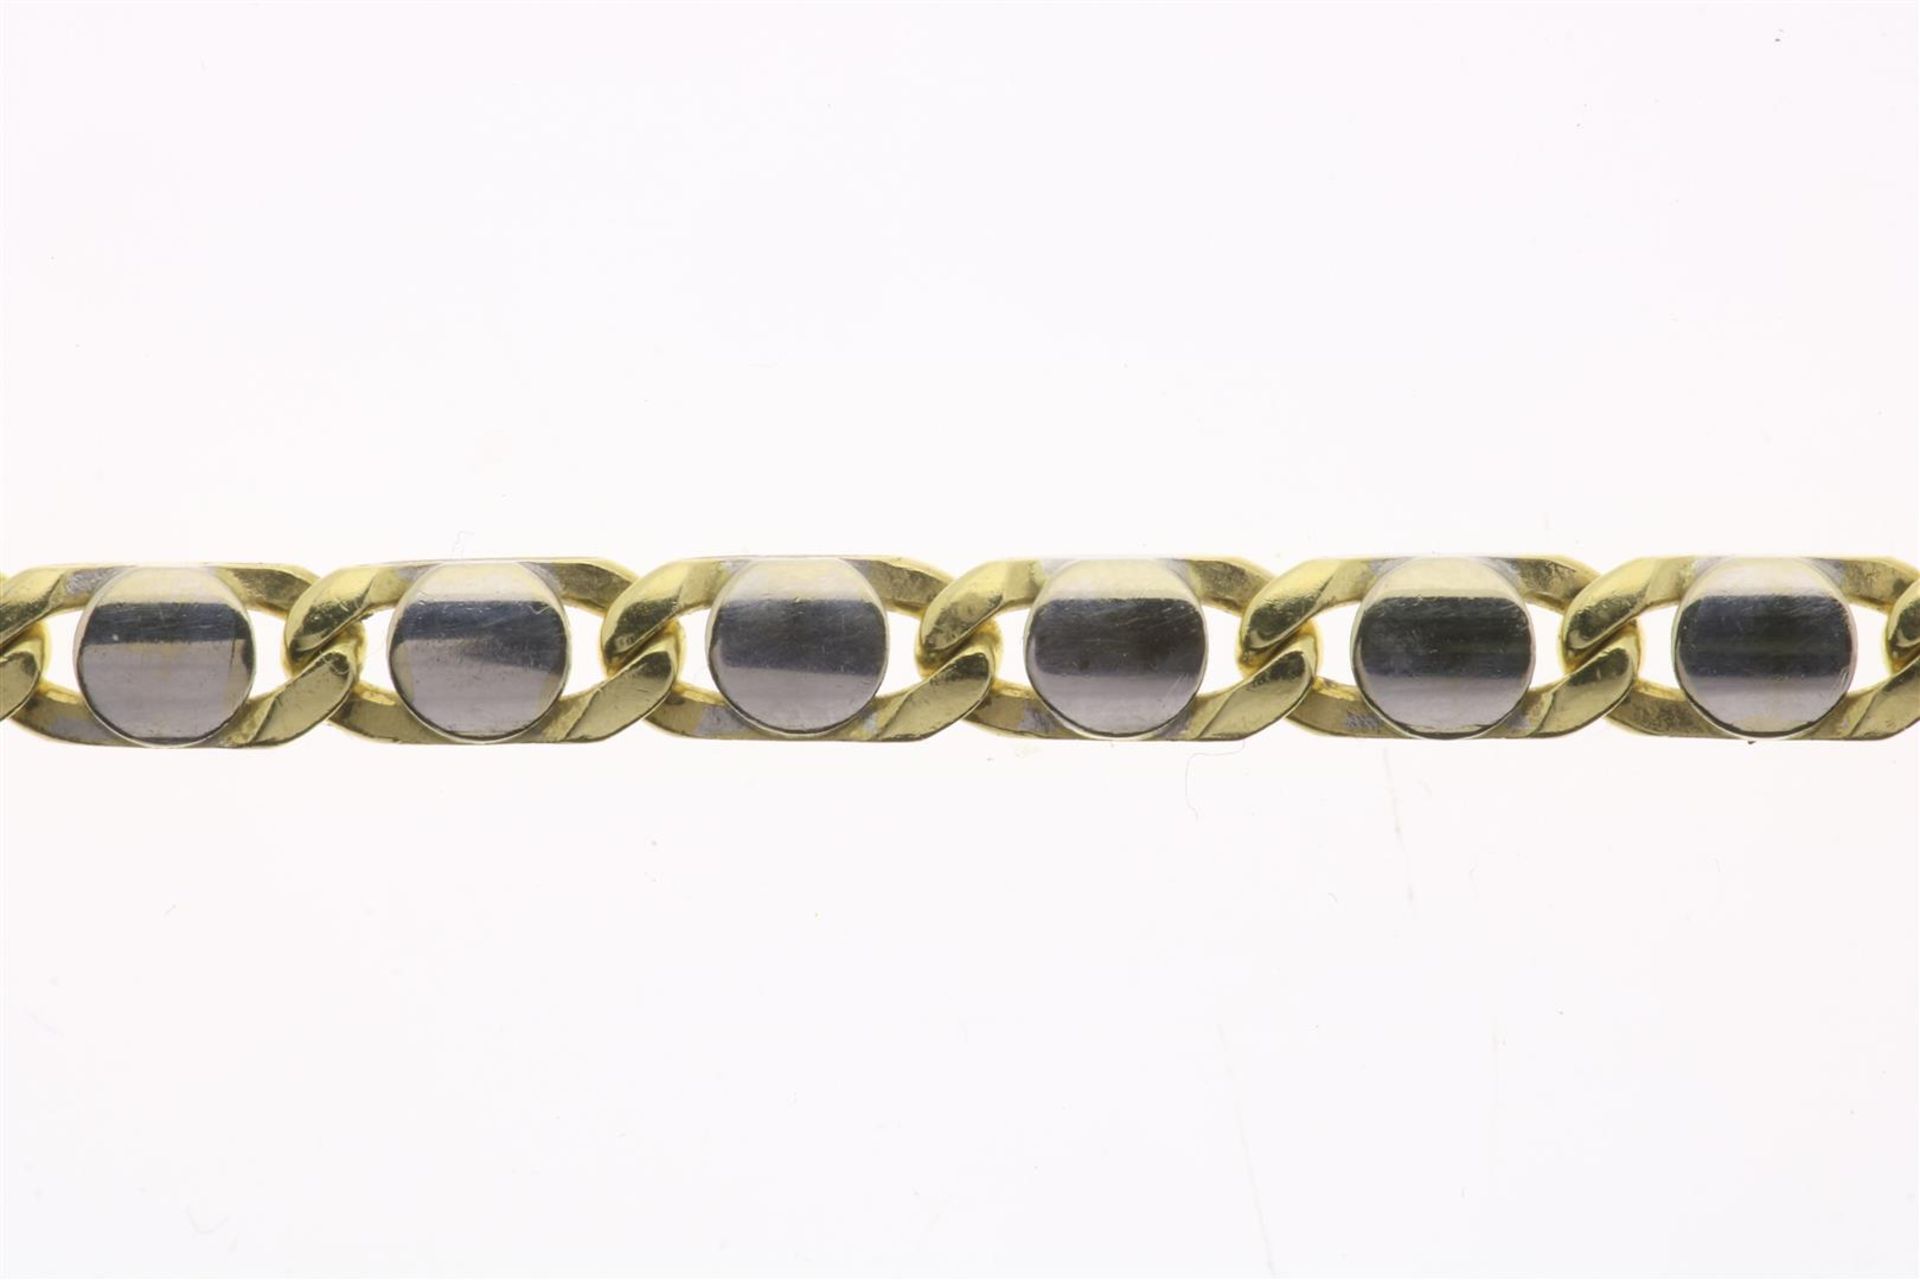 Bicolor gold necklace, grade 585/000, gross weight 21.8 grams, length 44 cm.